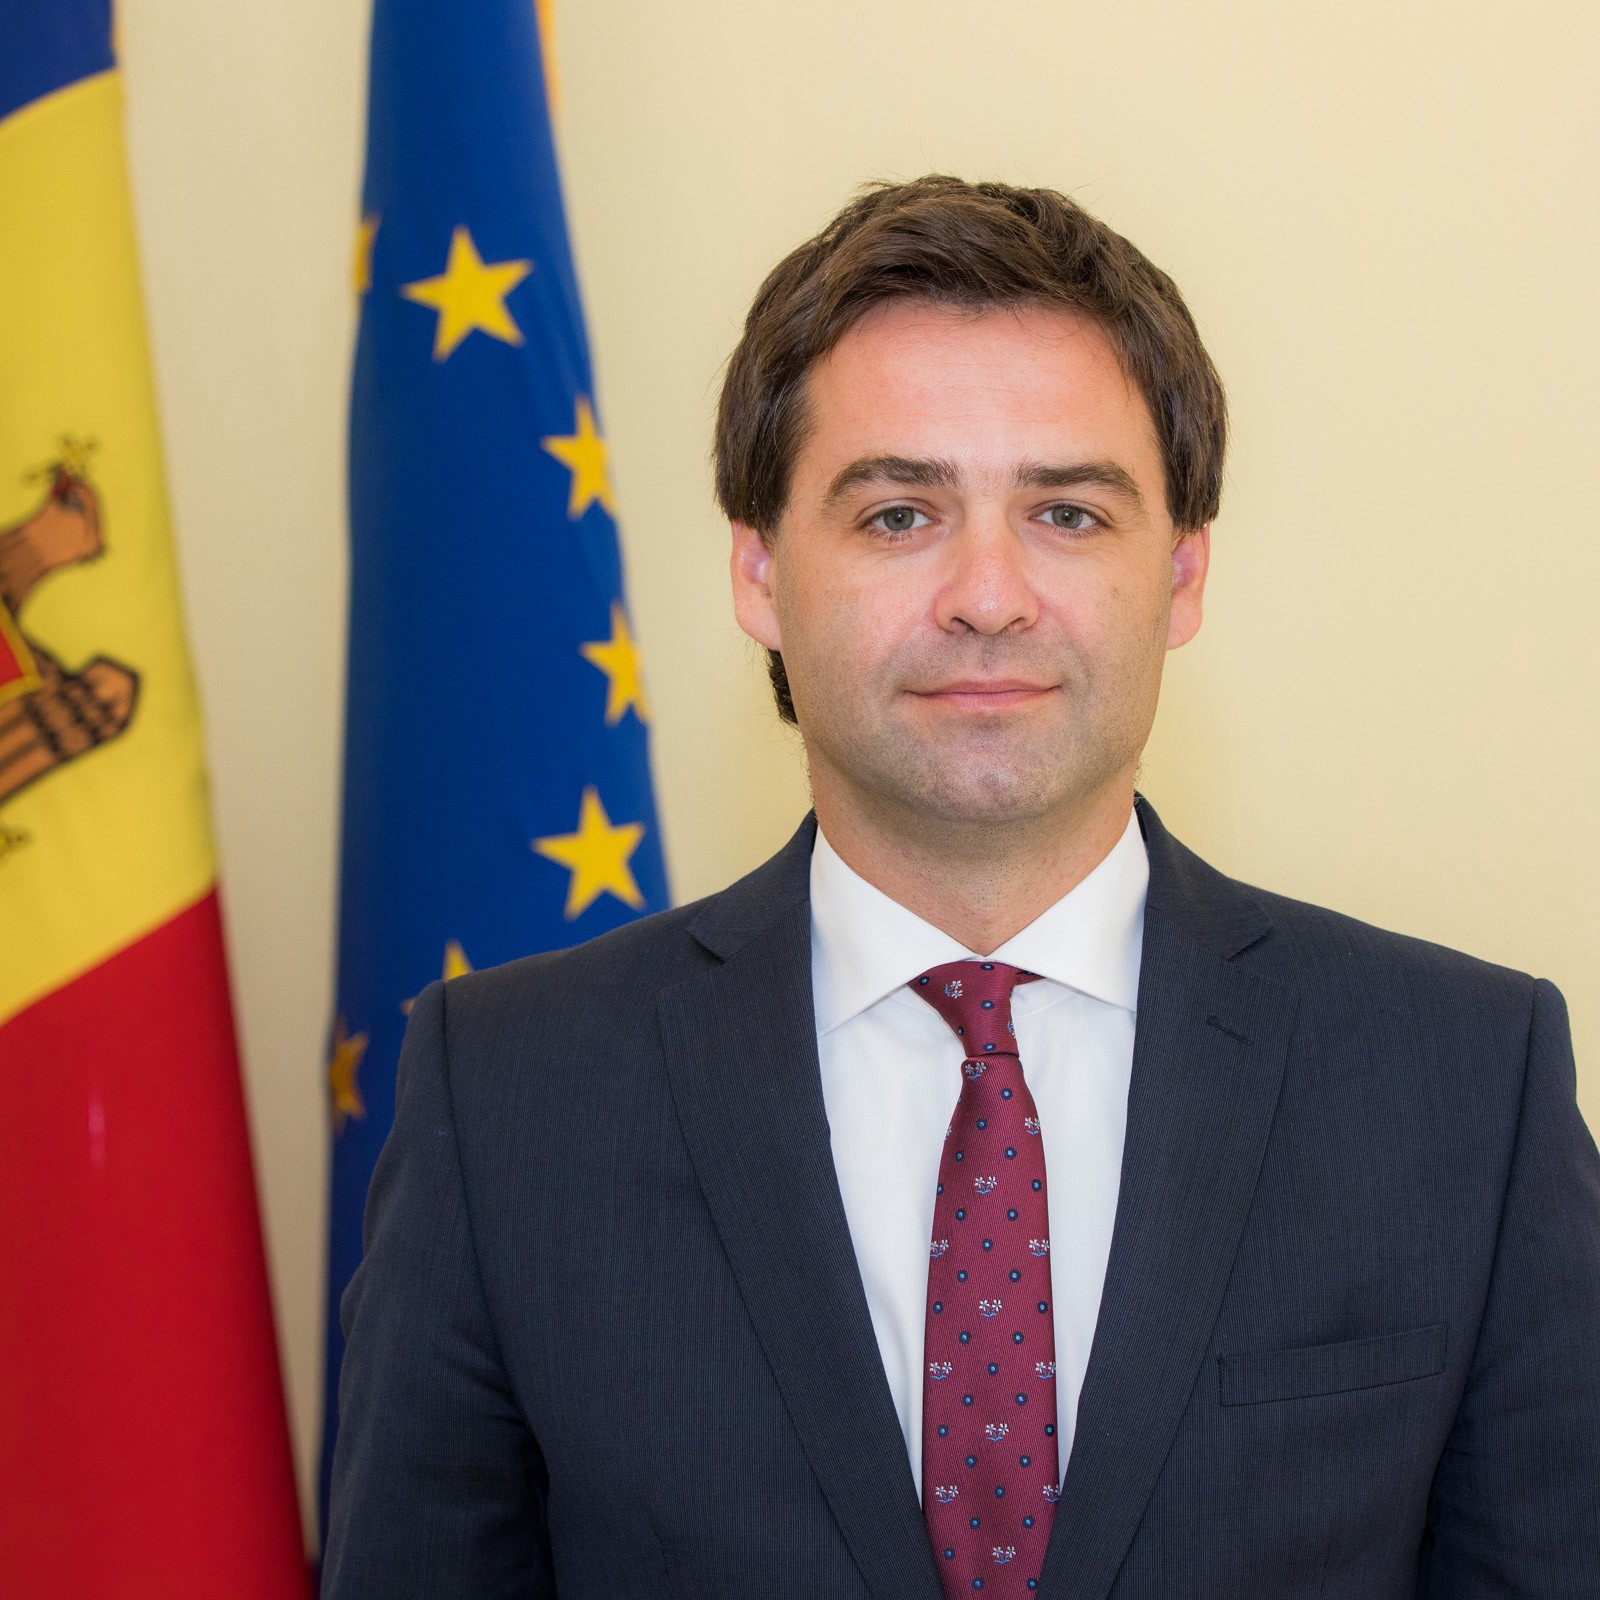 Moldova seeks sign on EU accession talks by year-end